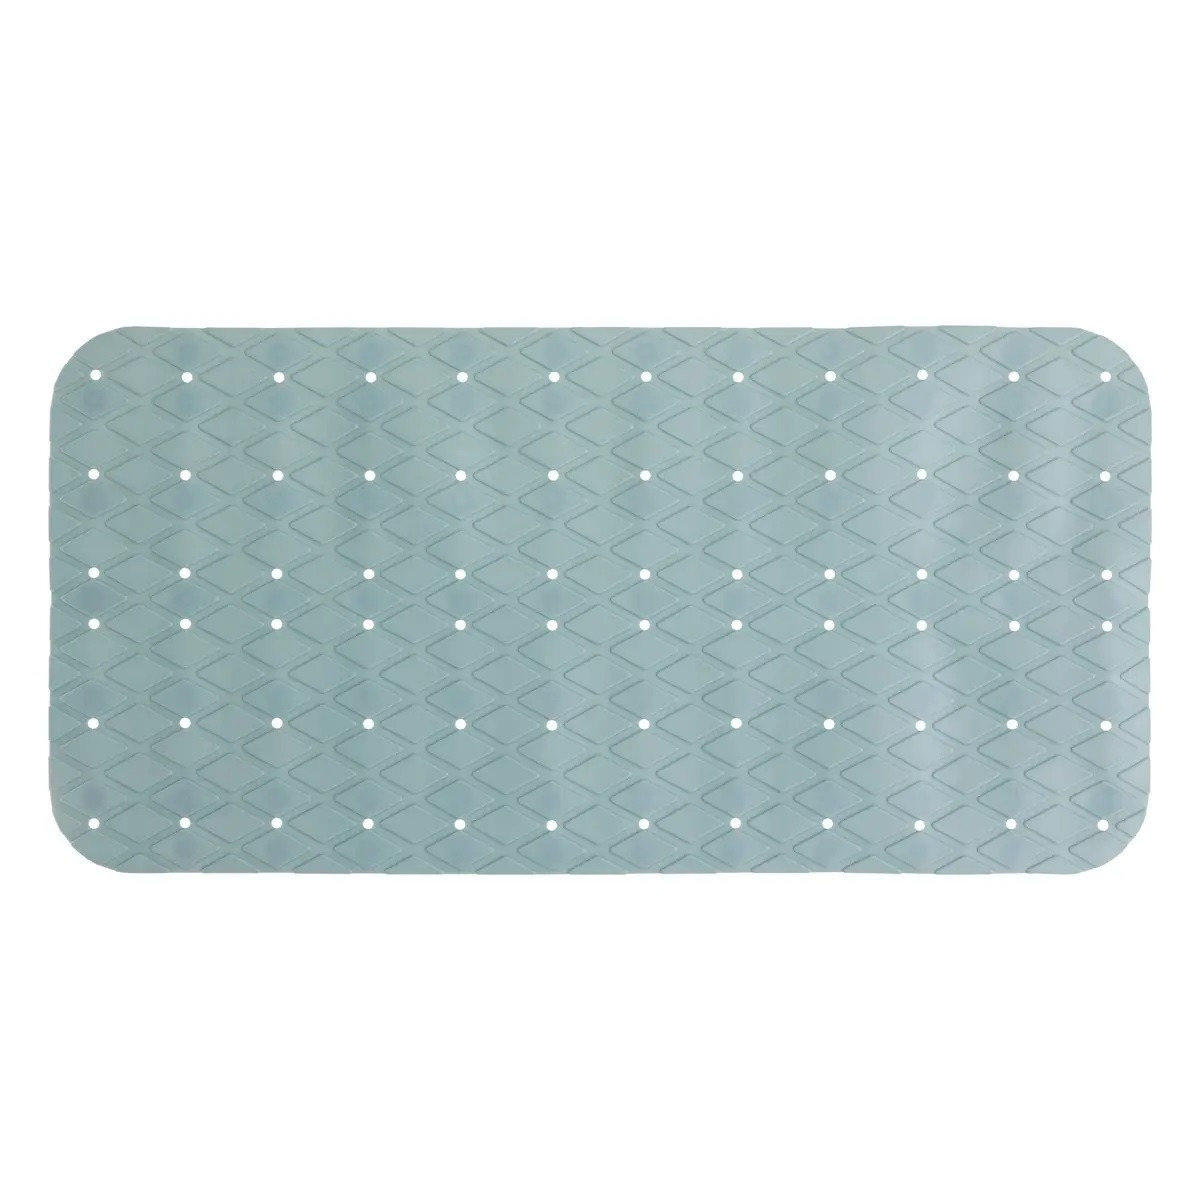 Douche-bad anti-slip mat badkamer pvc ijsblauw 70 x 35 cm rechthoek